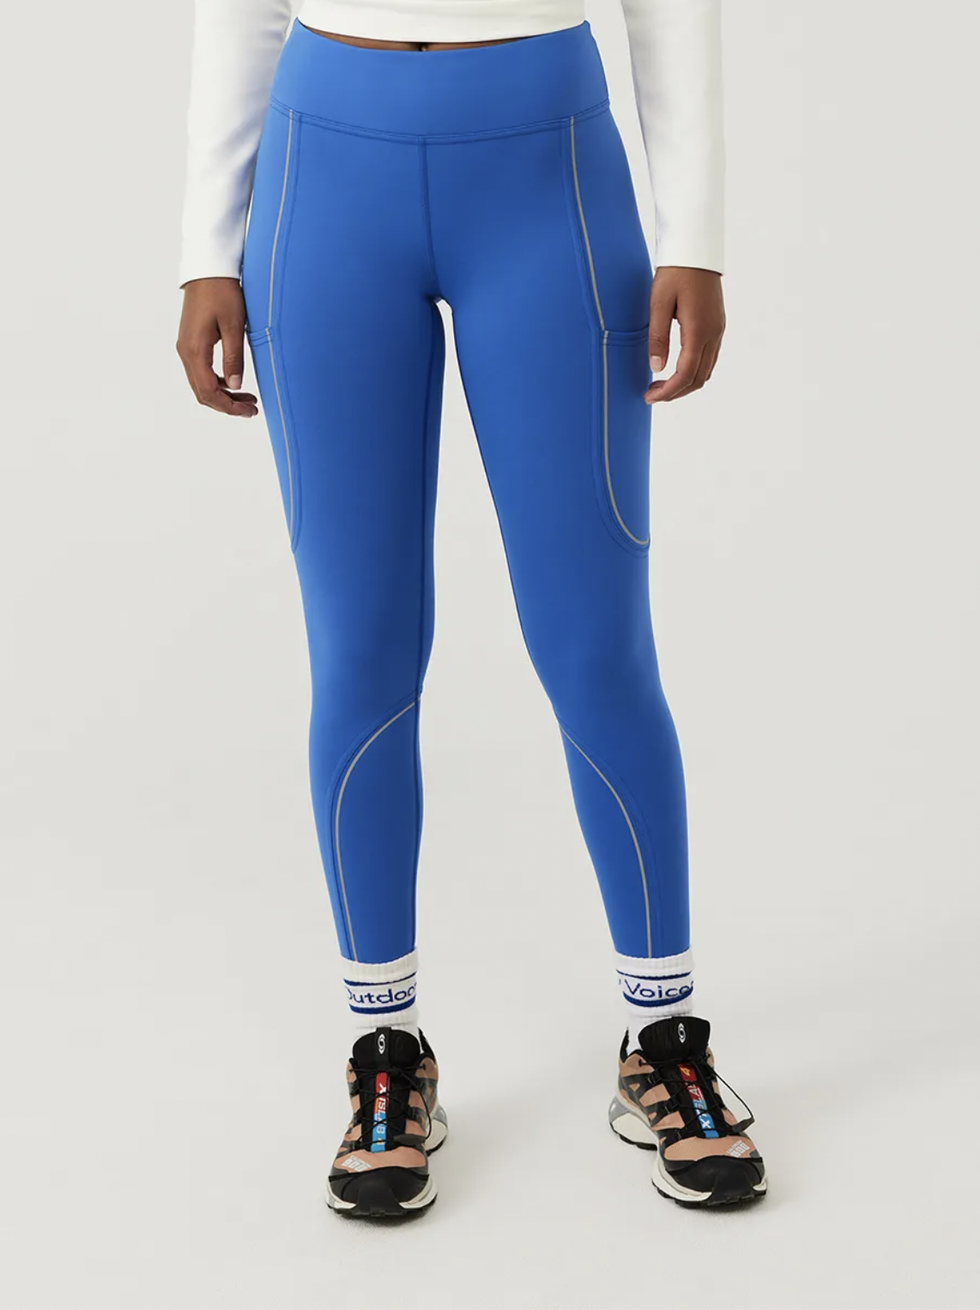 Which legging styles have decorative edges like the tight stuff leggings? :  r/lululemon